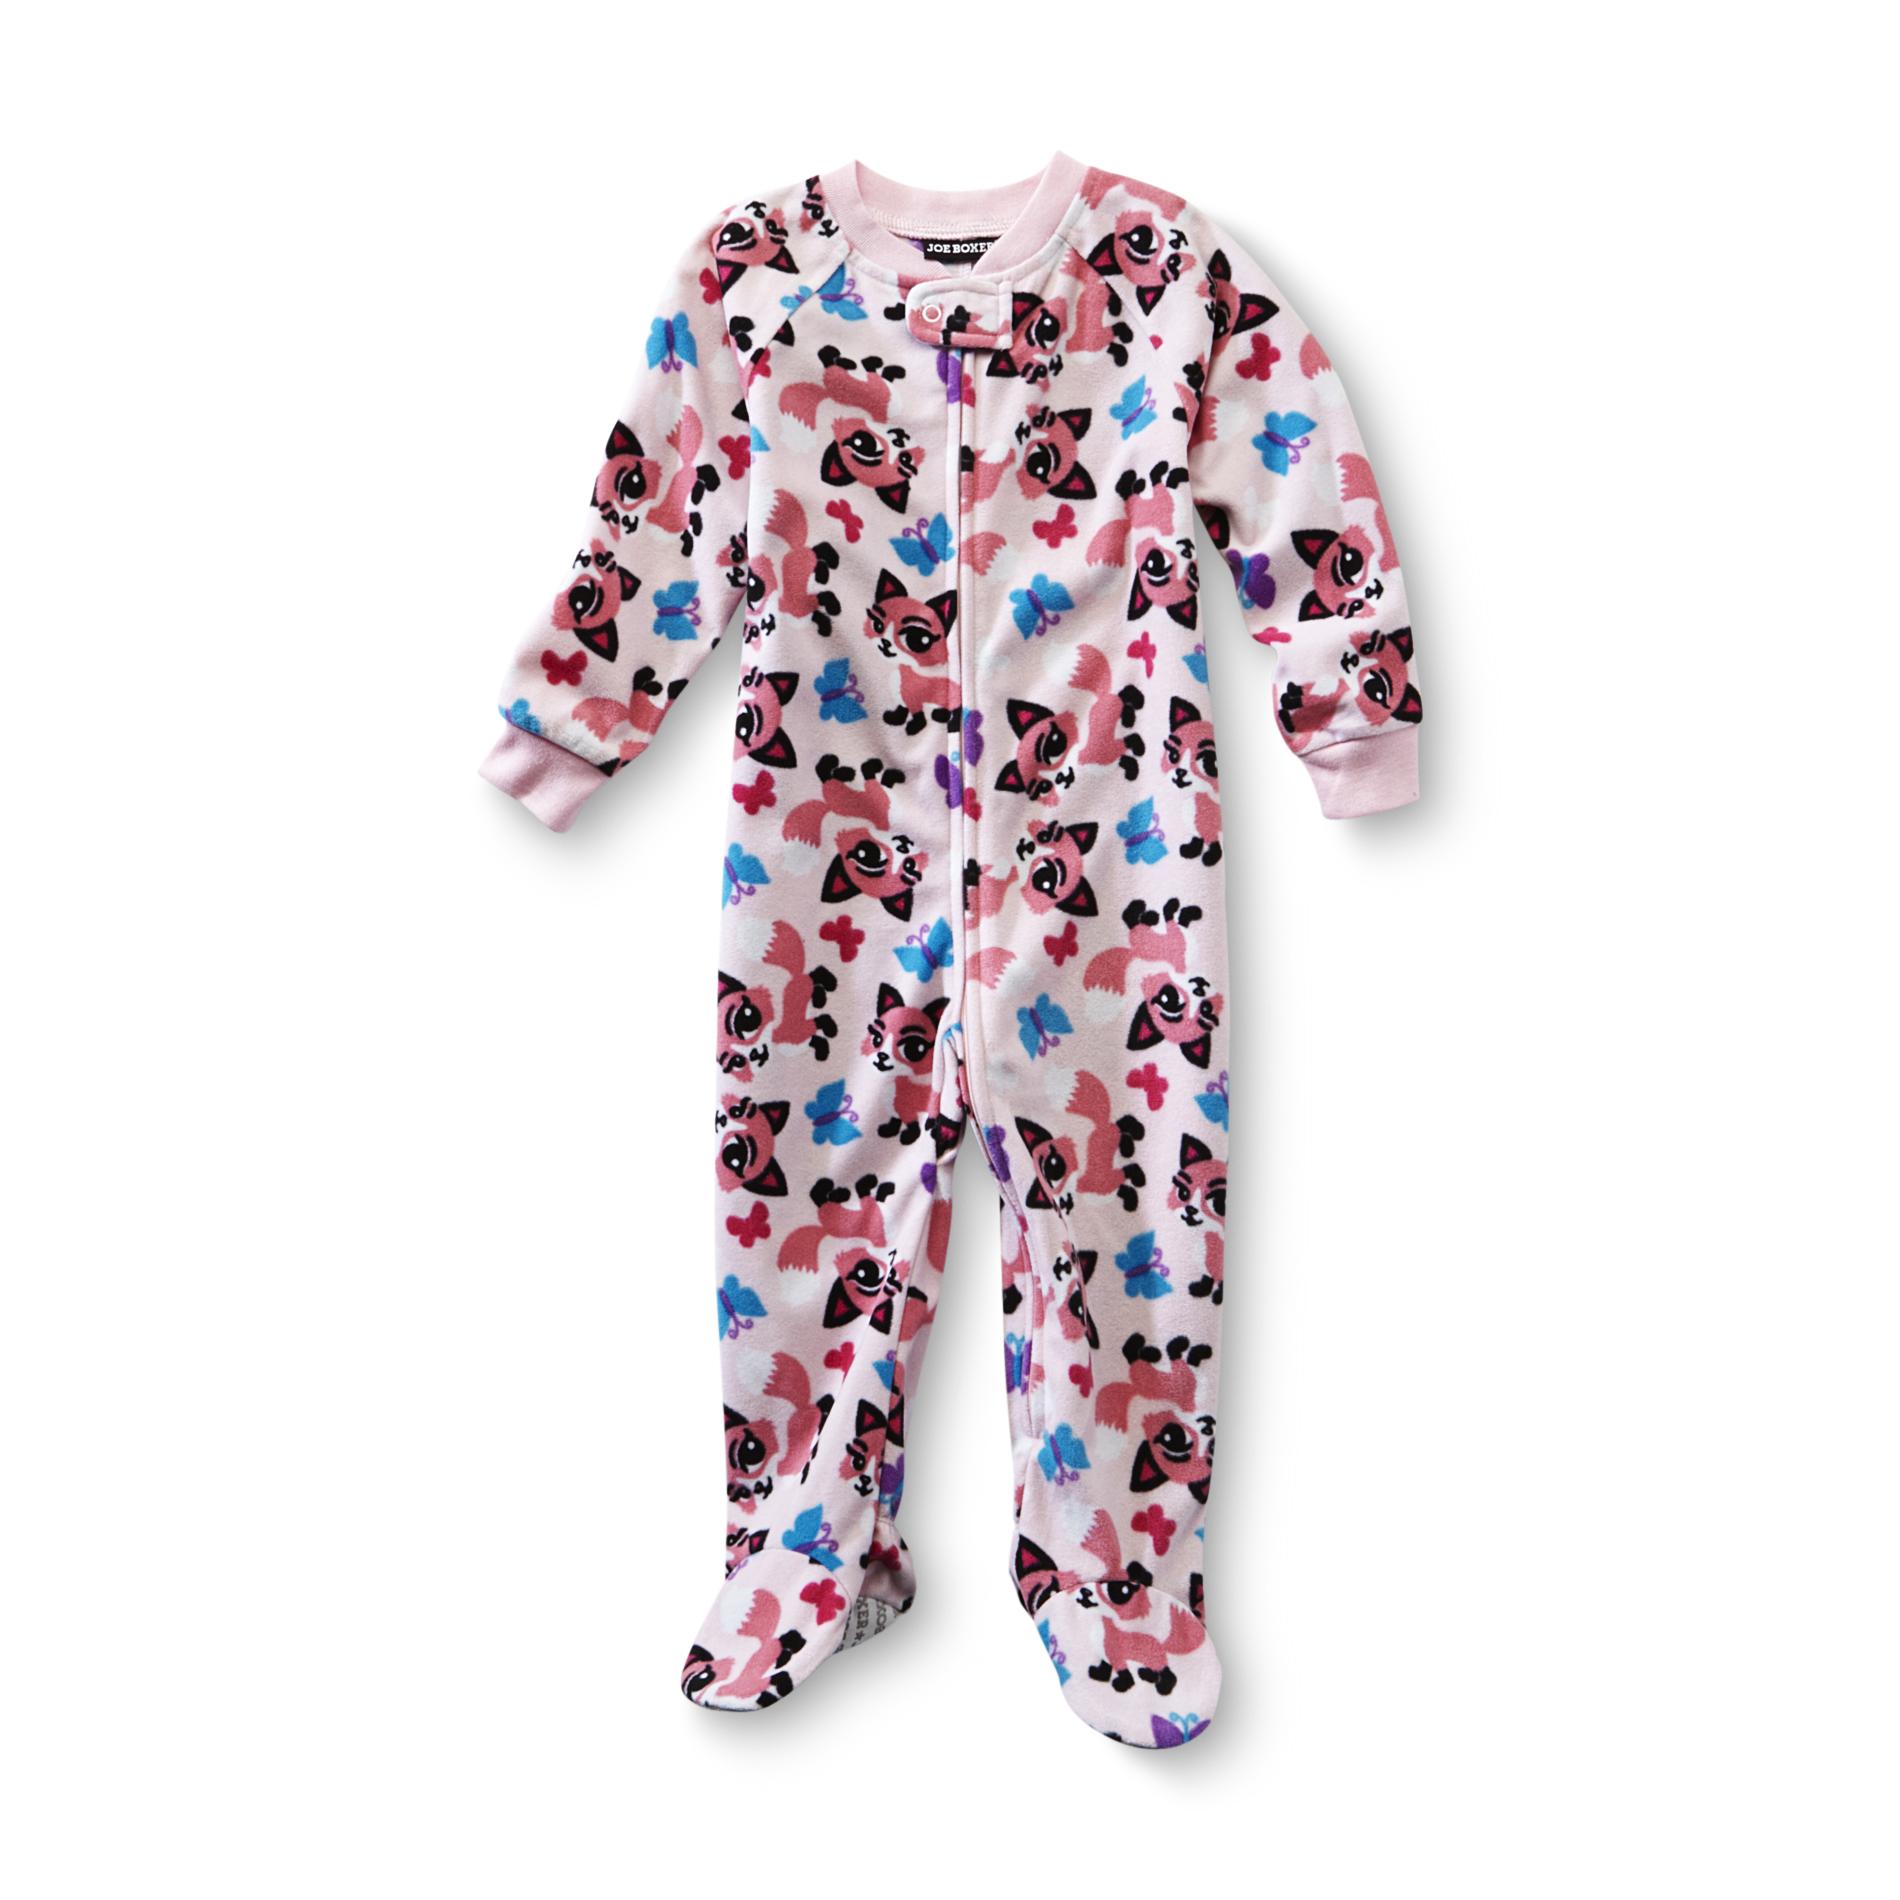 Joe Boxer Infant & Toddler Girl's Footed Sleeper Pajamas - Fox